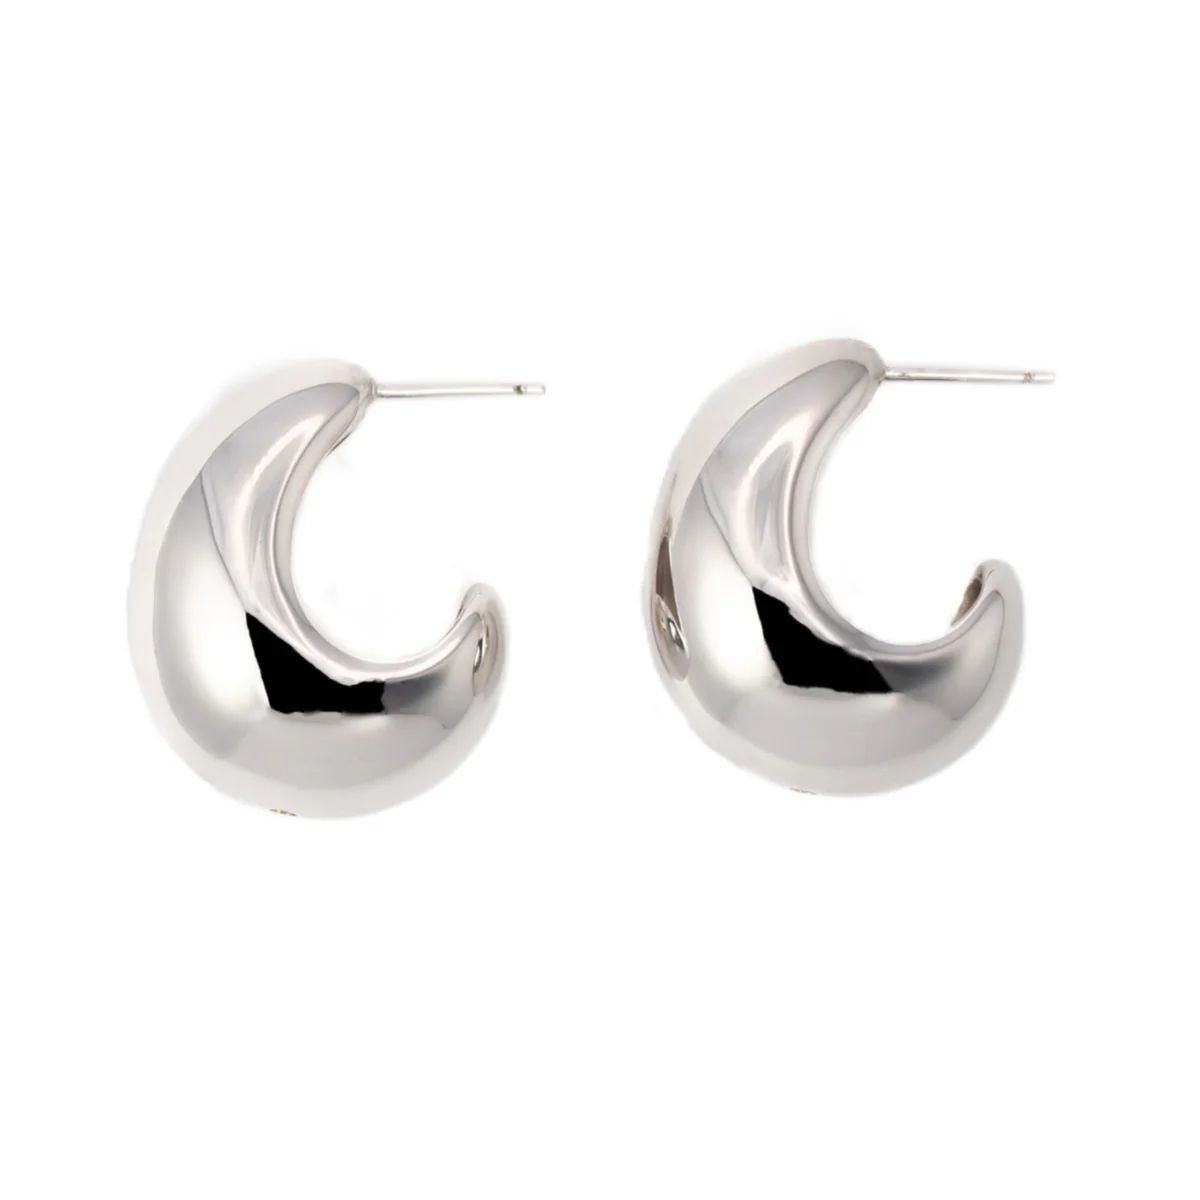 Renaissance Hoops - Silver Medium | Erin Fader Jewelry Design